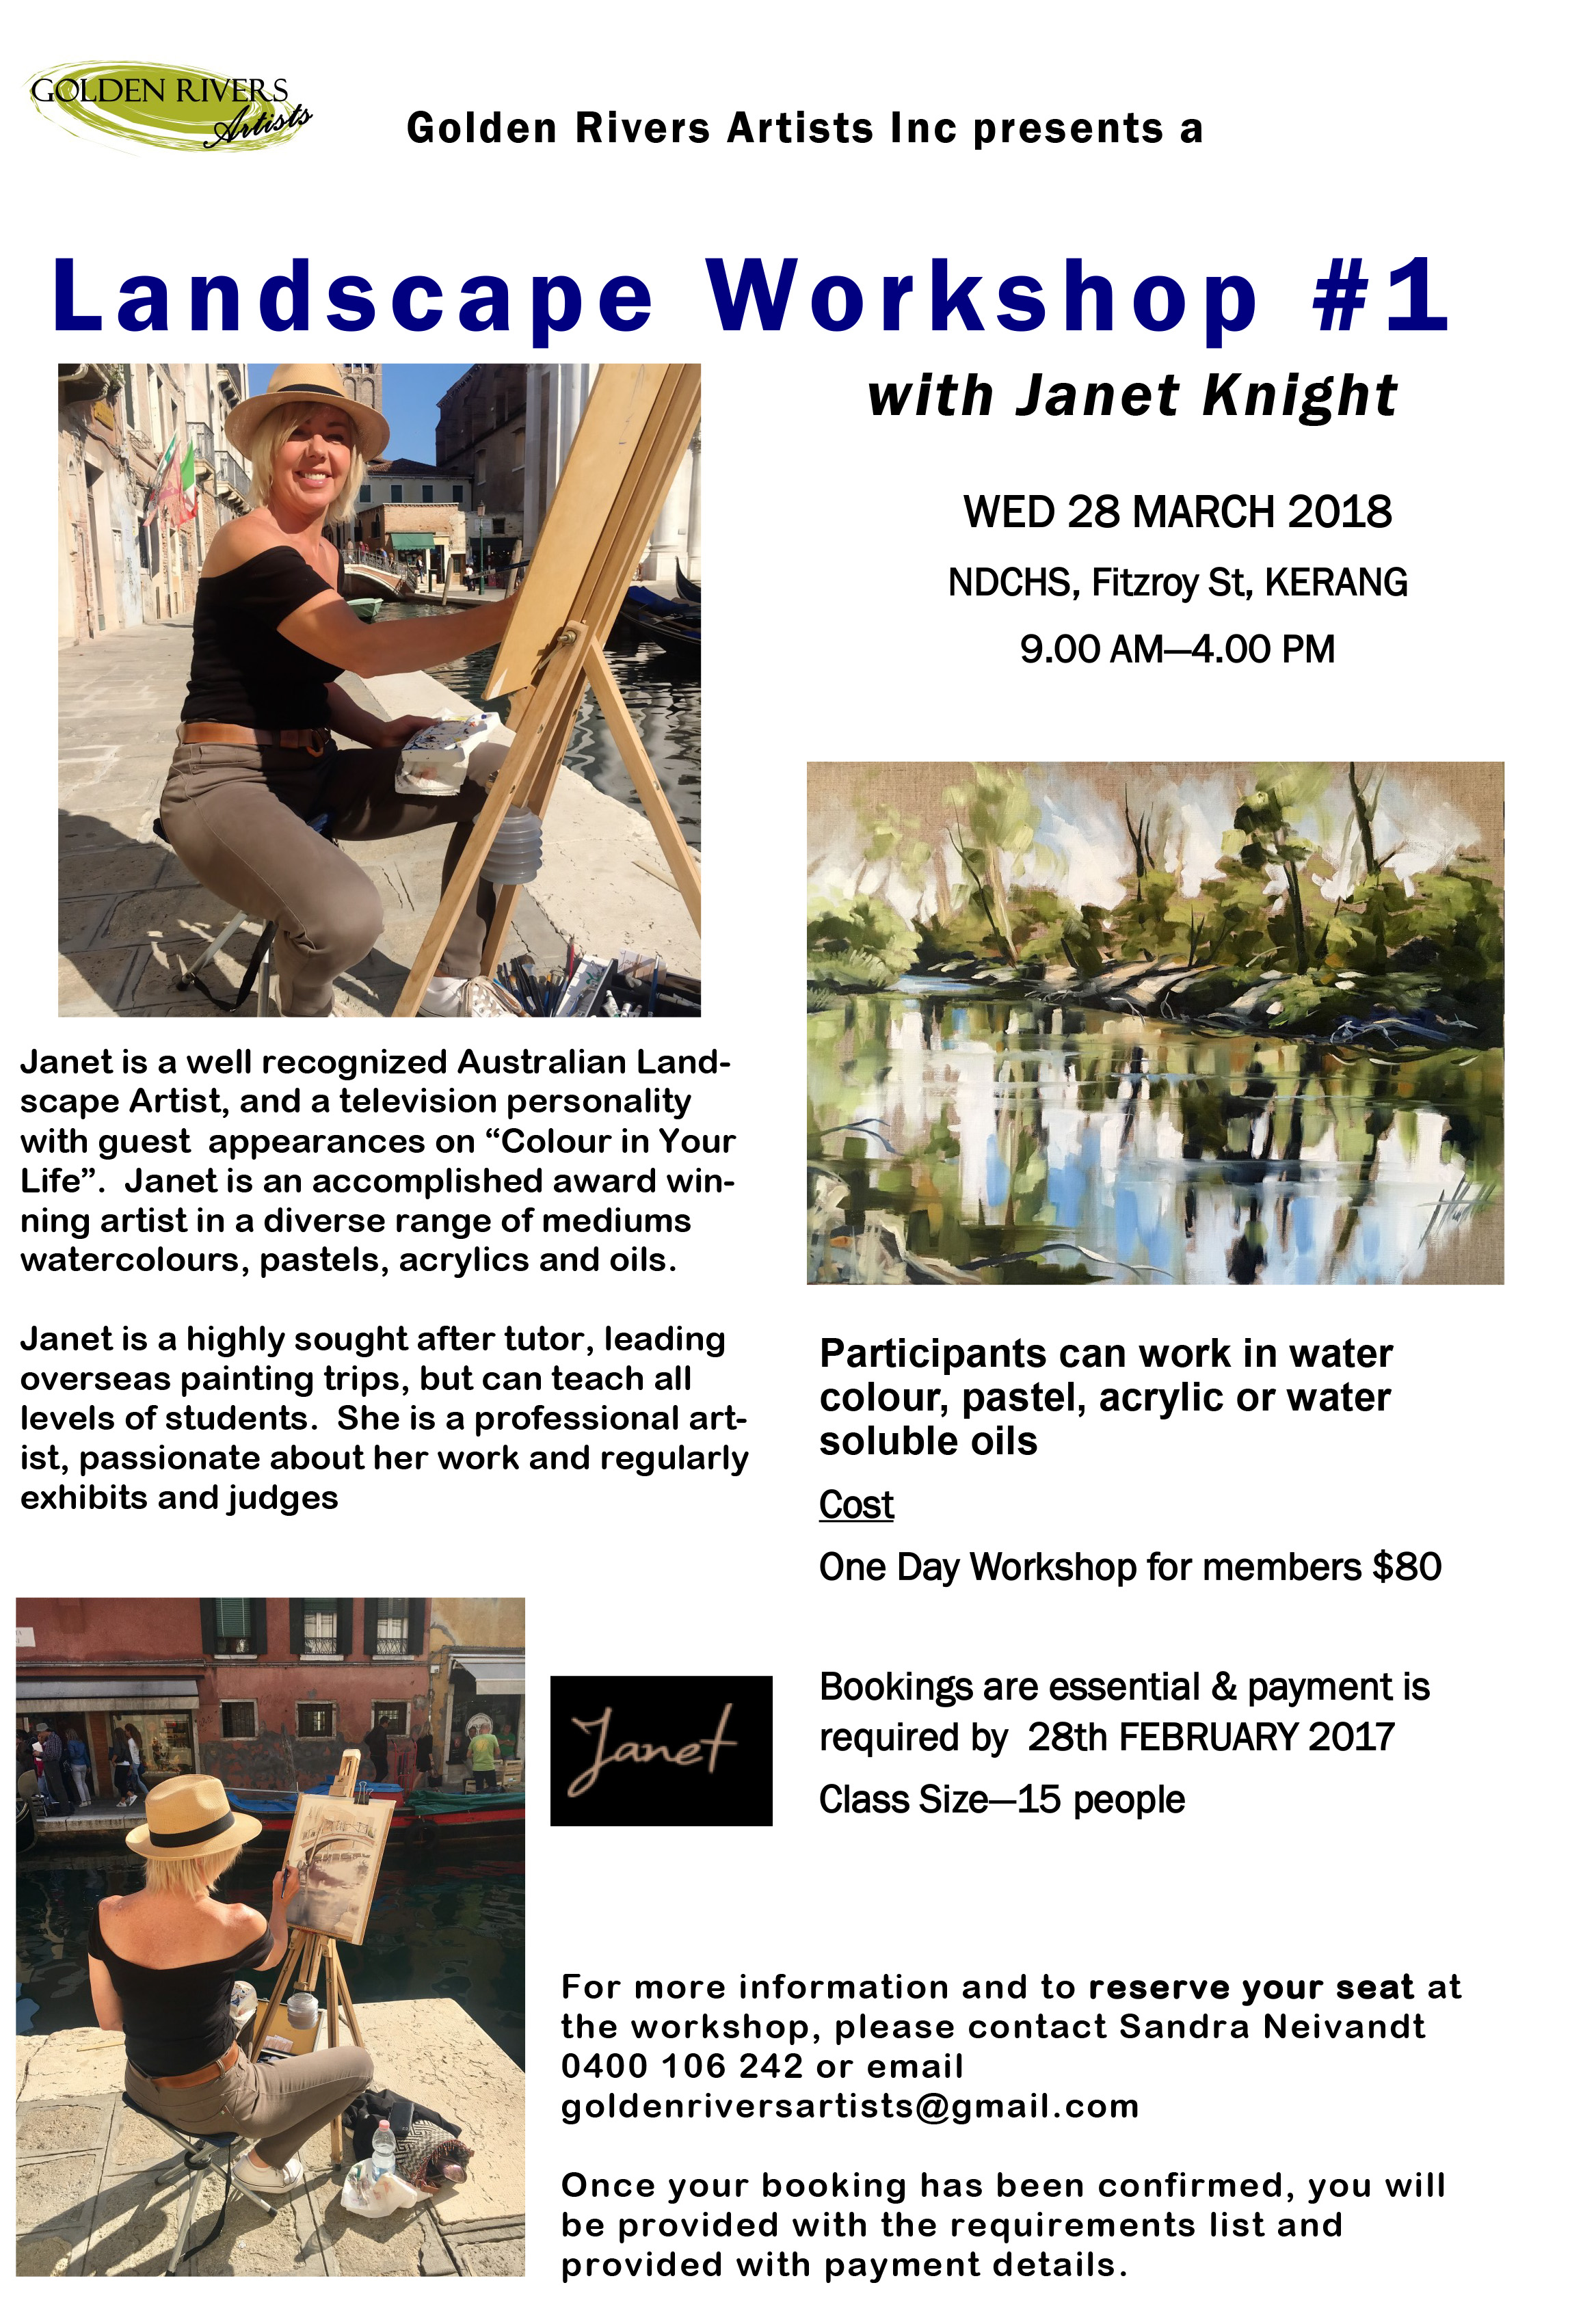 Janet-Knight-Workshop-1-Wed-28-March-2018-Landscape.jpg